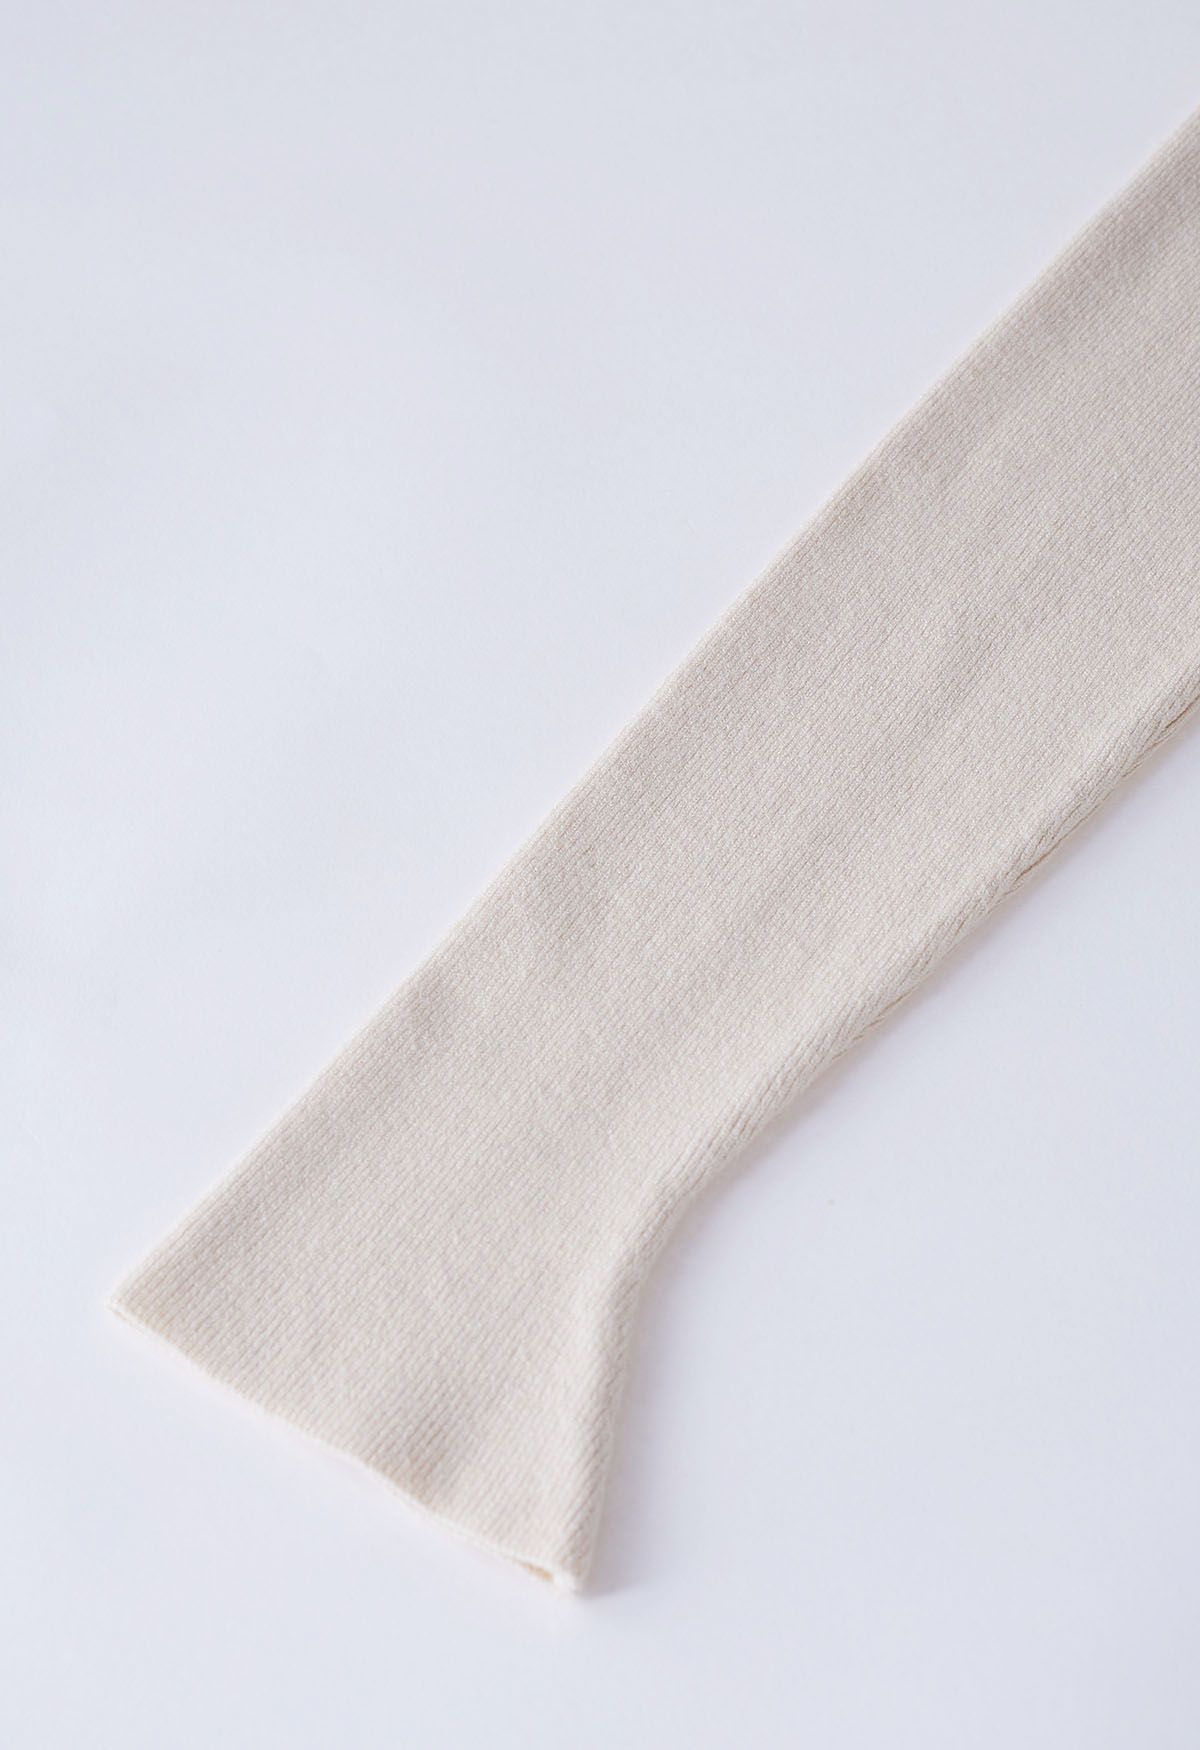 Notch Neckline Fitted Knit Top in Cream